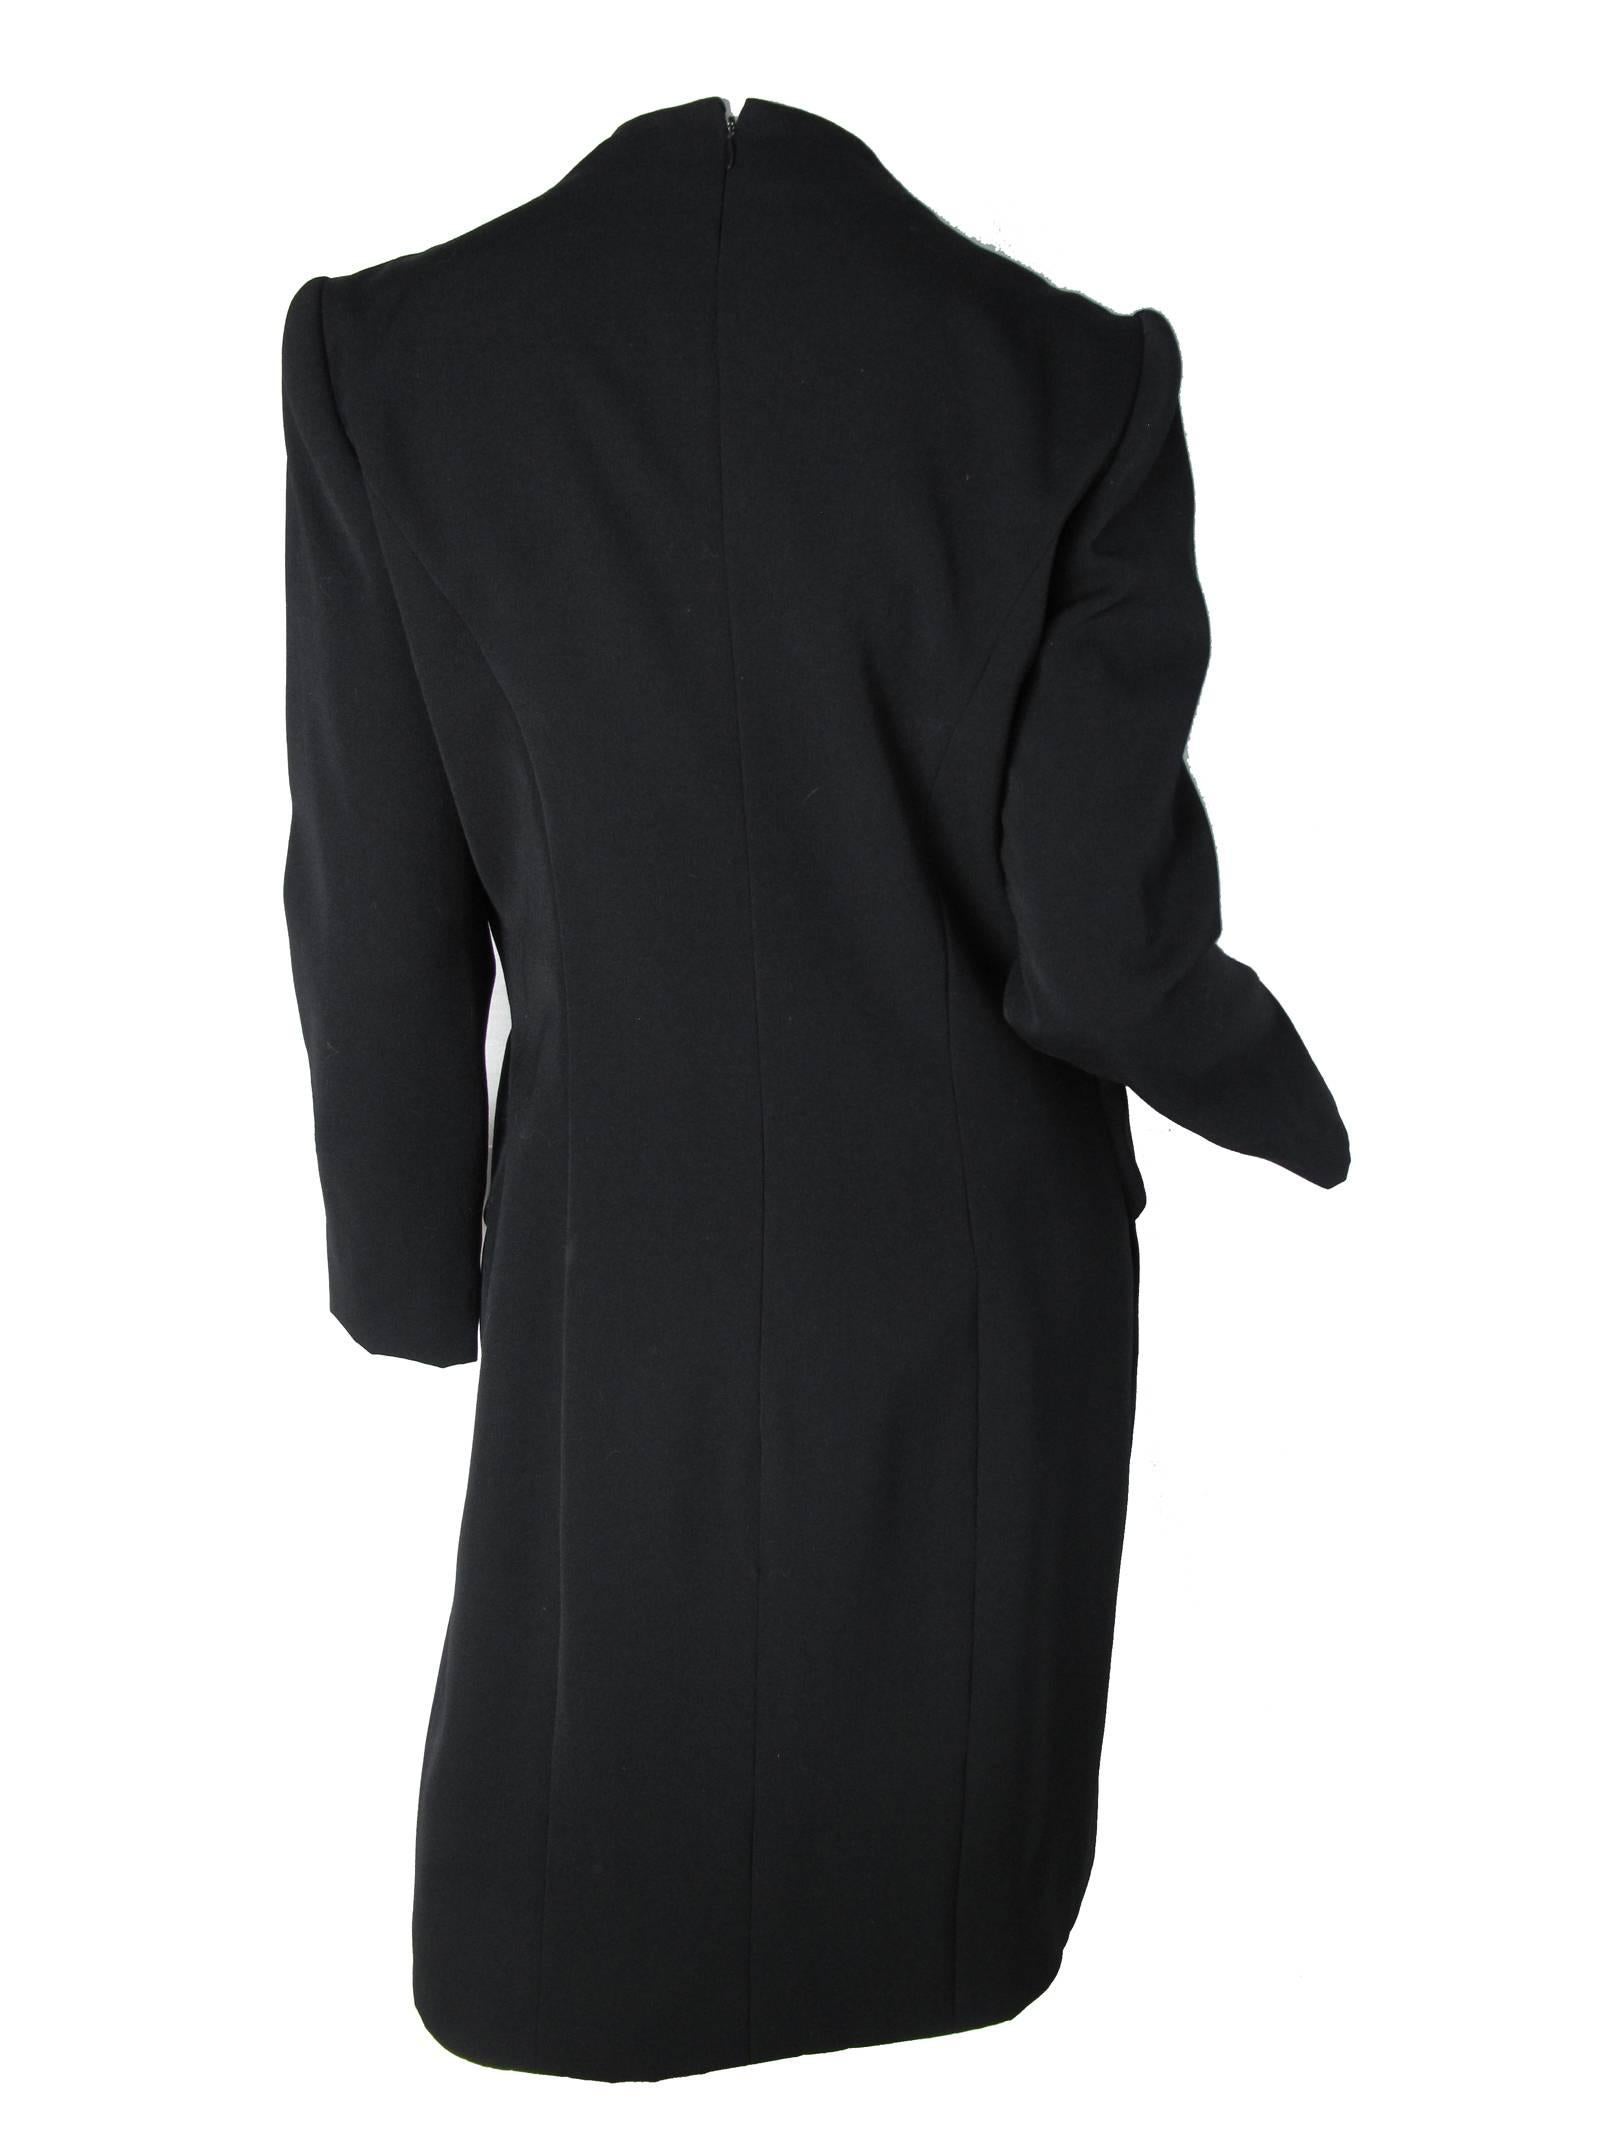 Galanos black wool gabardine tuxedo cocktail dress with cream satin 